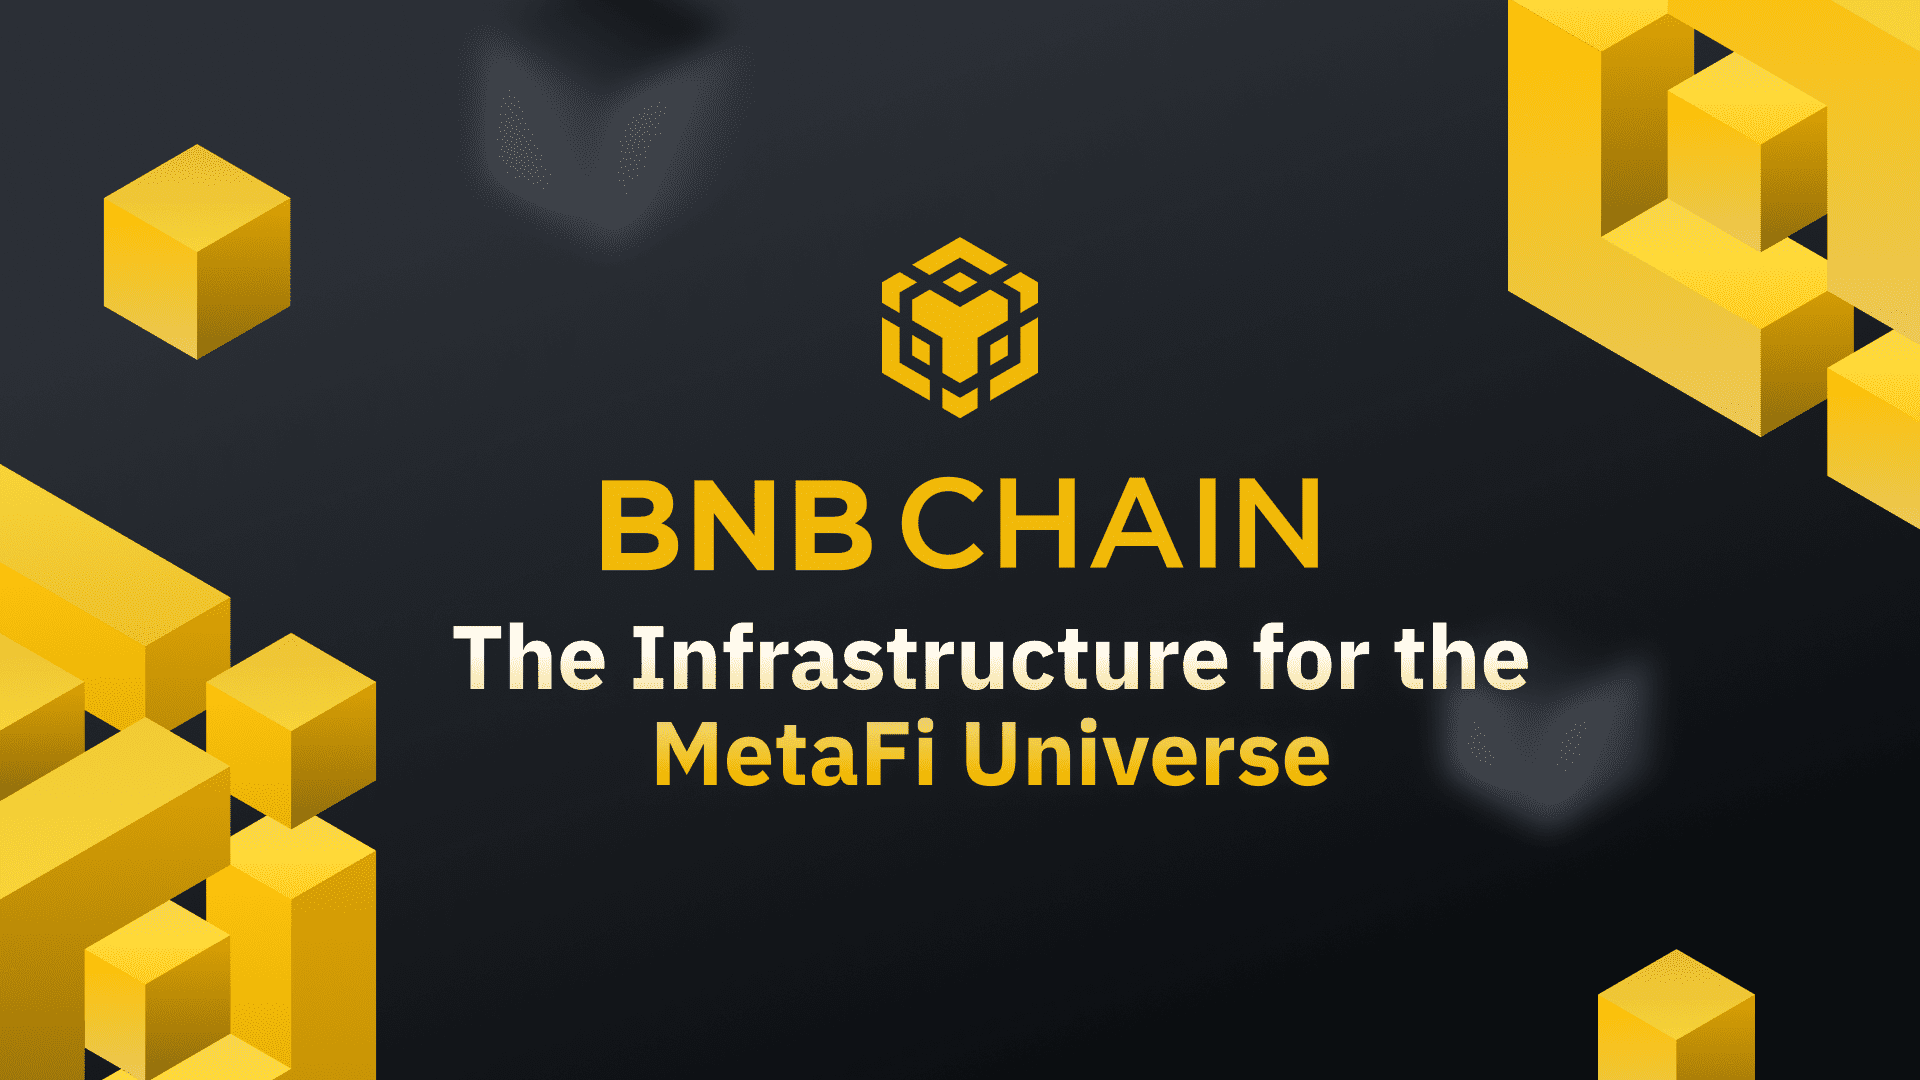 Binance has renamed its blockchain ecosystem BNB Chain